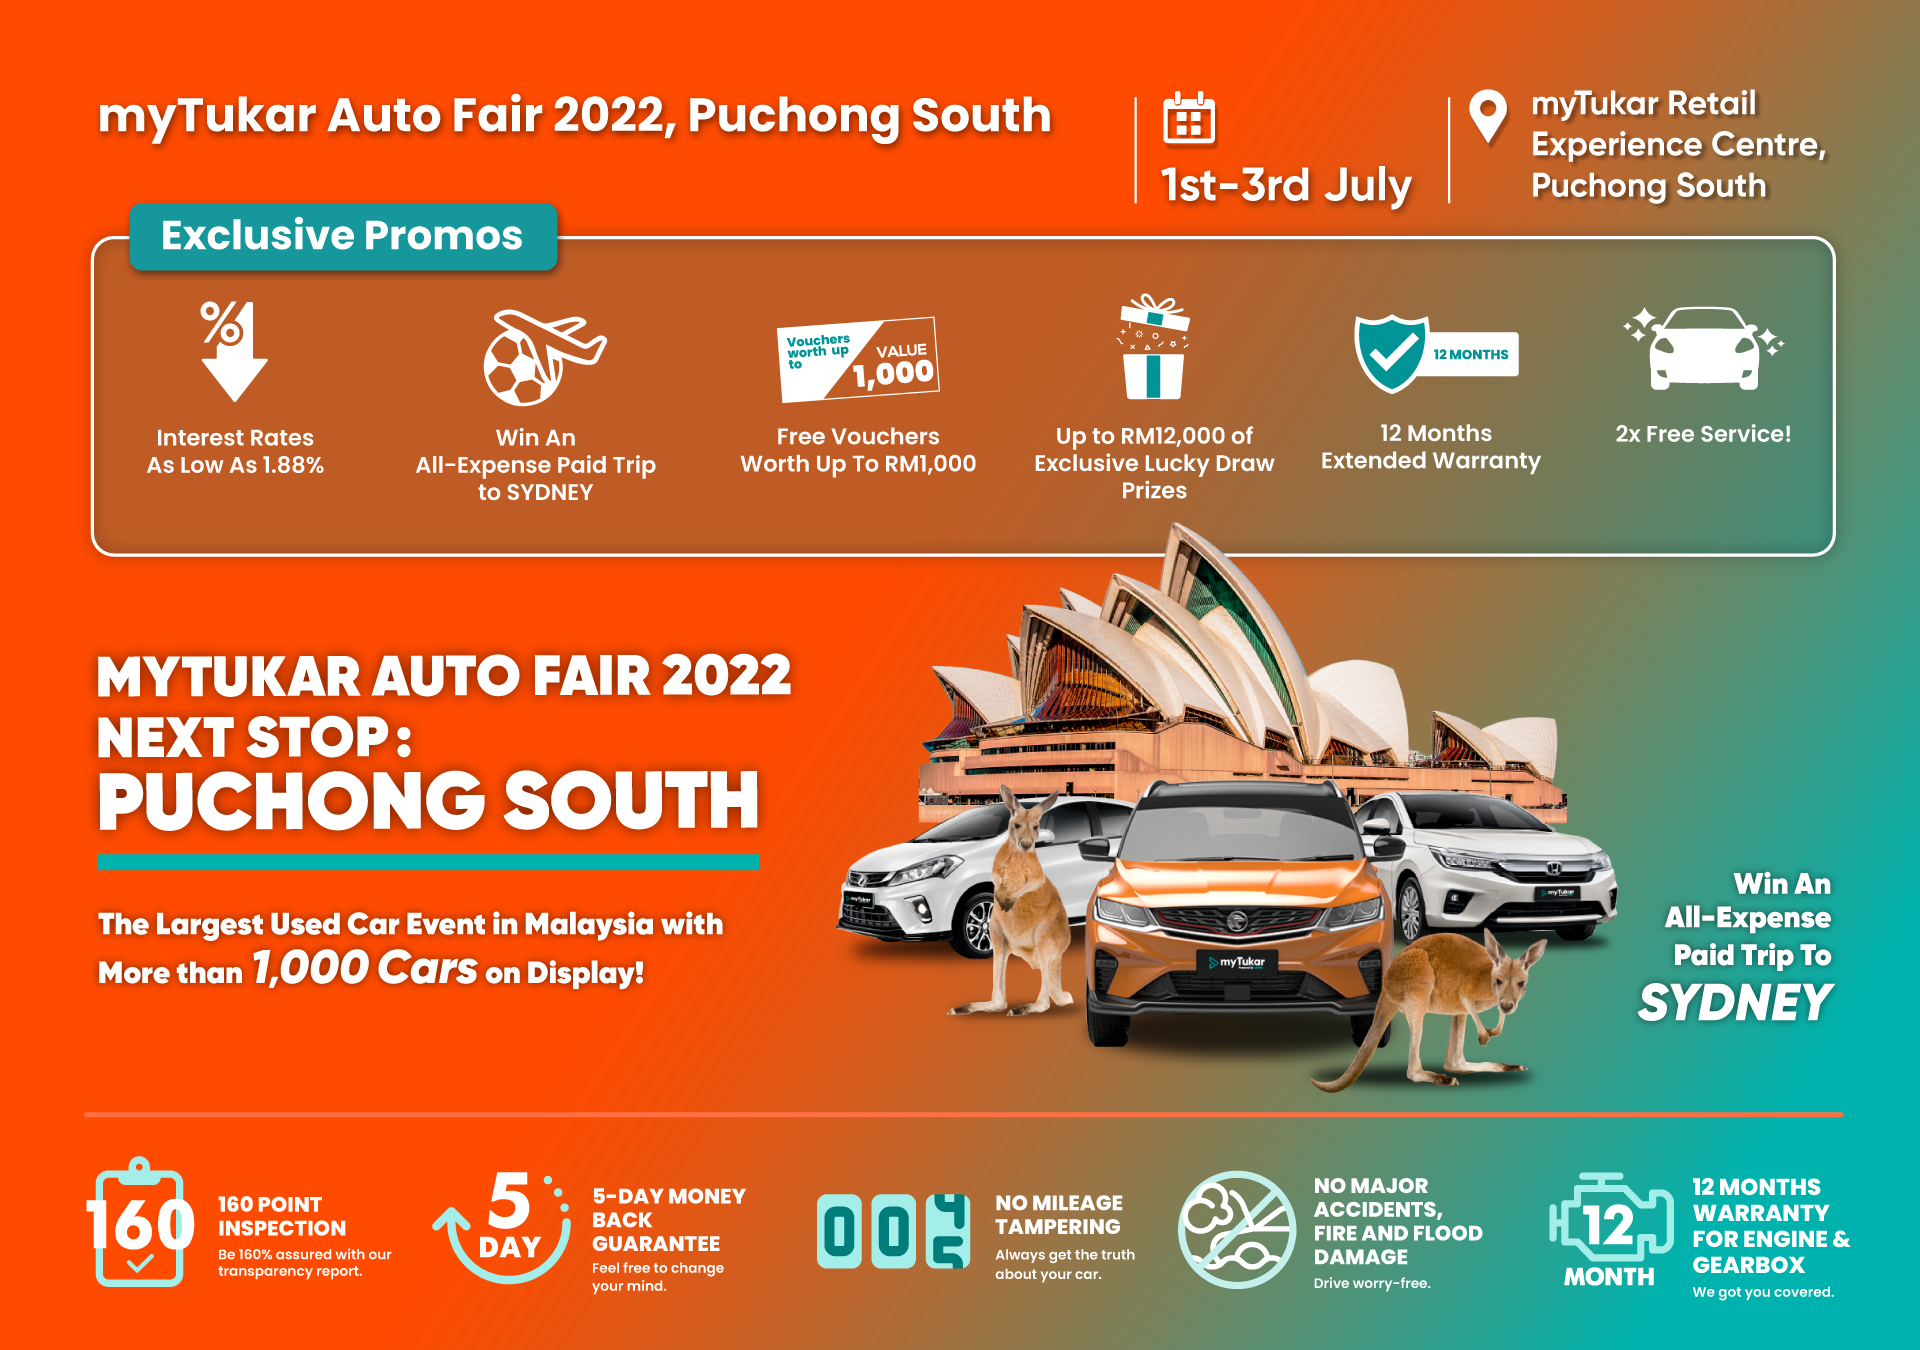 myTukar Auto Fair 2022 将在7月1-3号于雪州蒲种南部盛大开展！更多超值优惠和奖品，澳洲悉尼旅游配套等你来赢